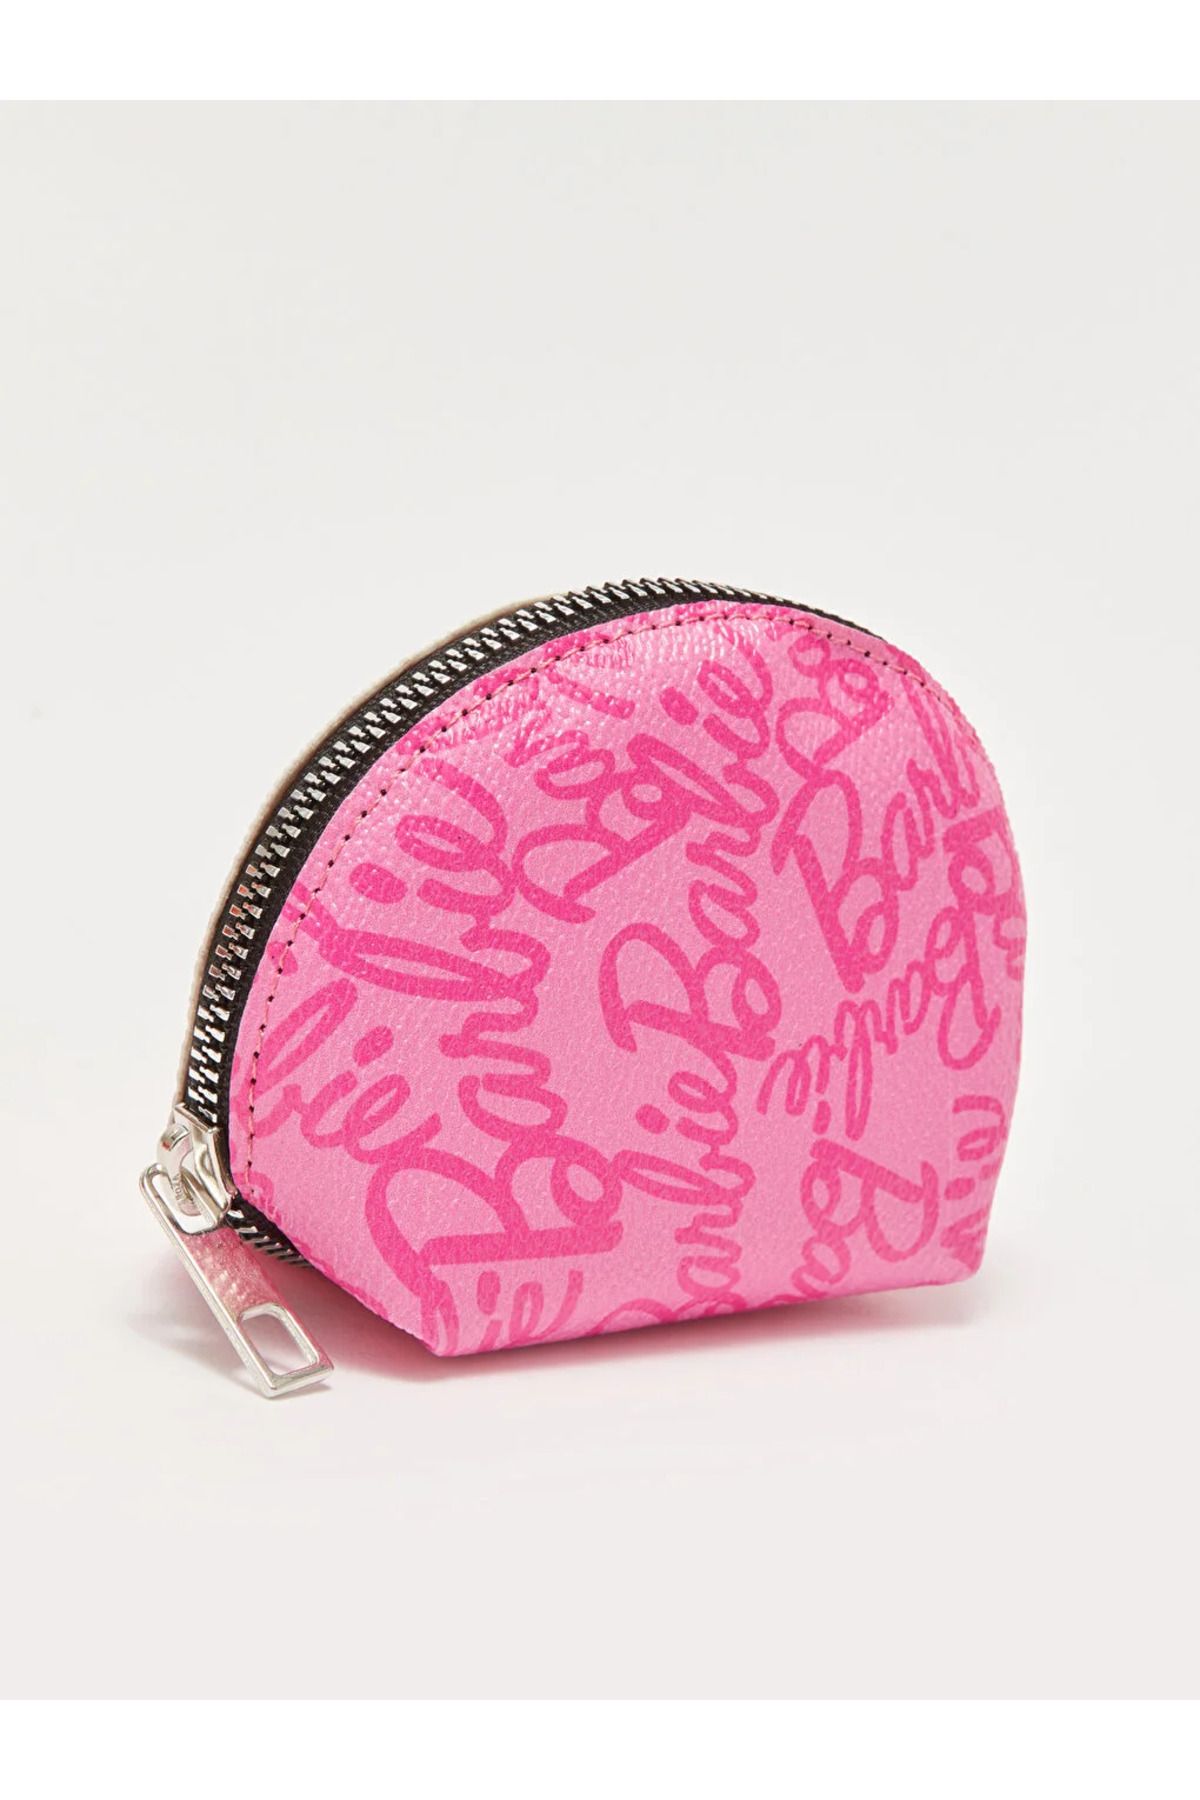 Retro Mattel Barbie Mini Bag Clutch Wristlet Hot Pink Sequin Coin Purse |  eBay